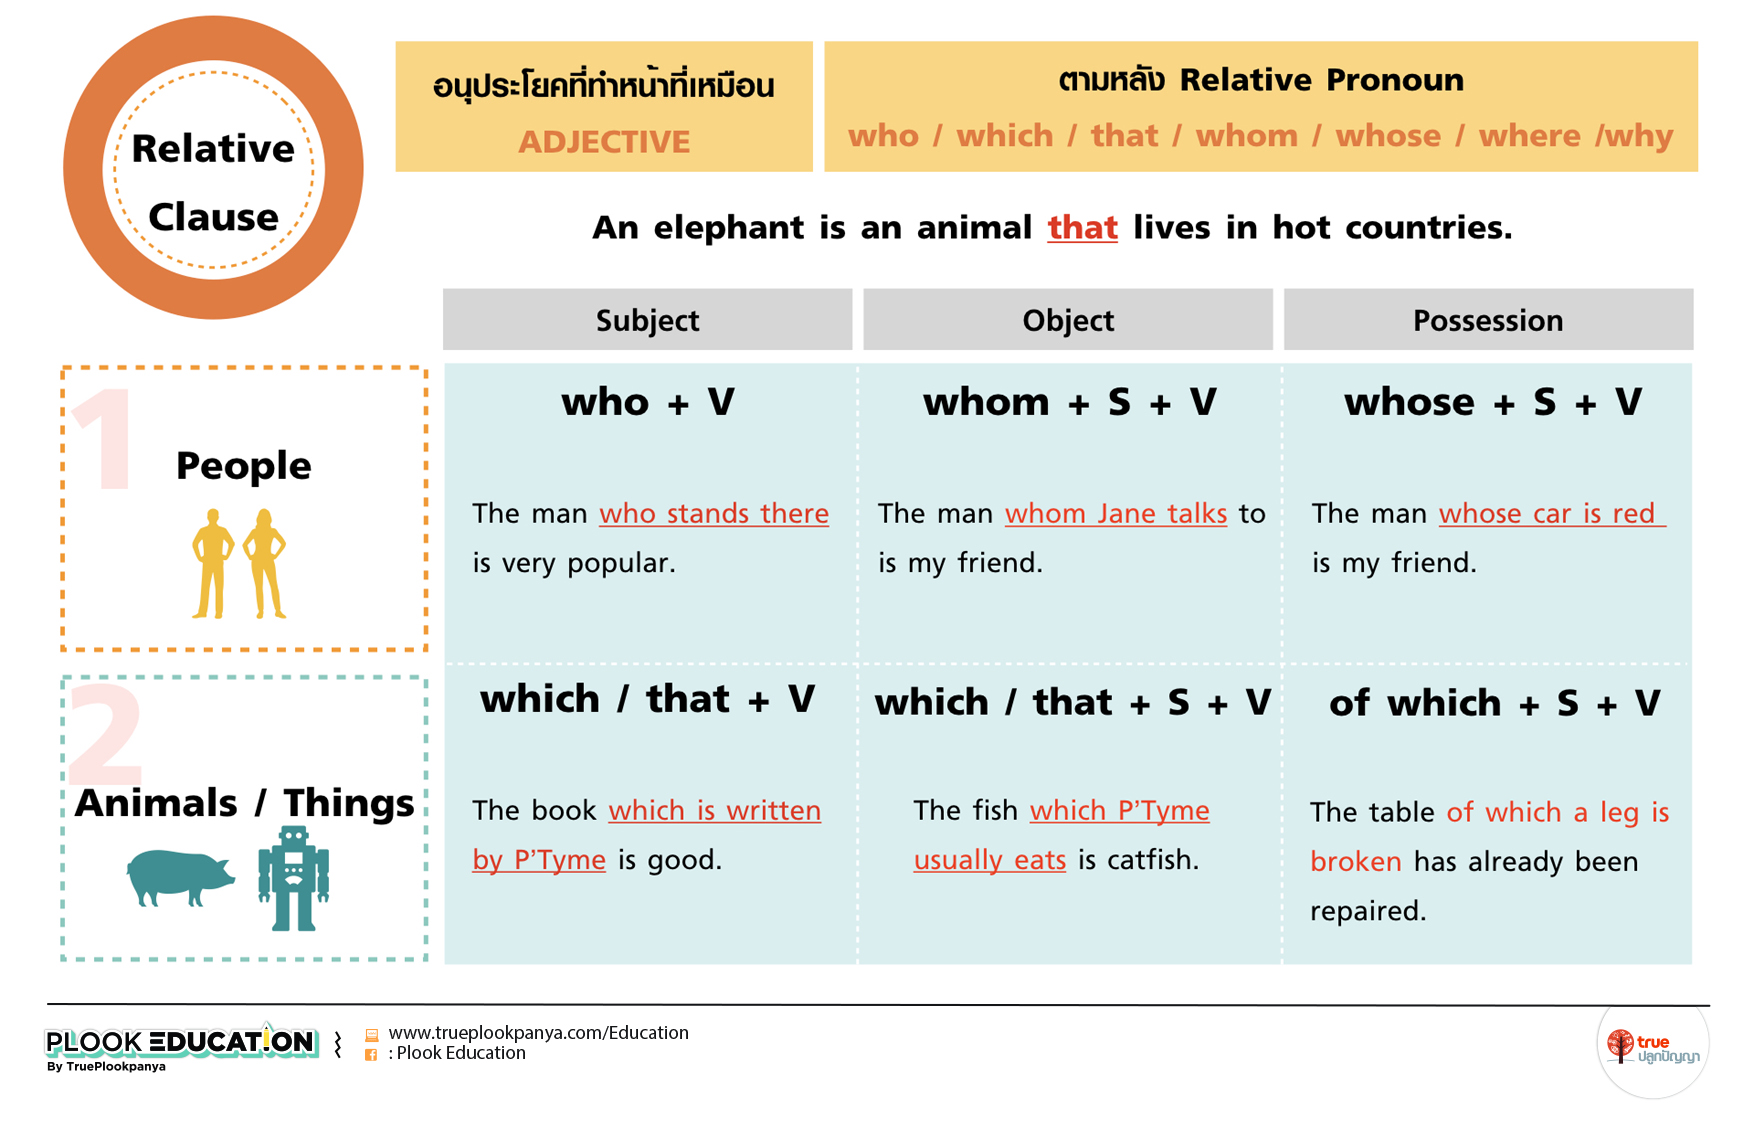 Relative Pronoun คือ อะไร